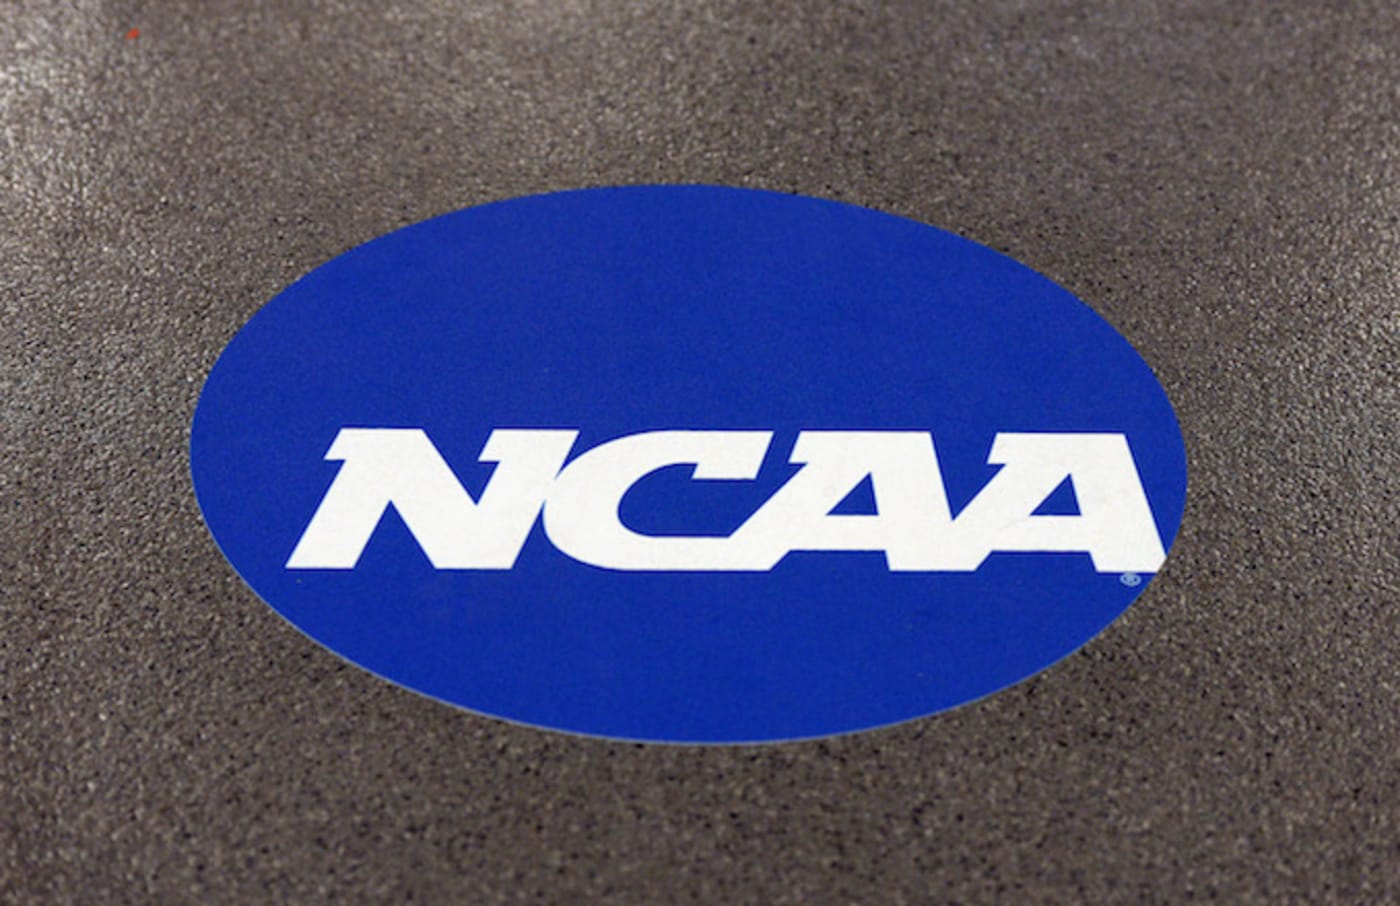 NCAA logo is displayed on the floor during the NCAA Men's Gymnastics Championship.